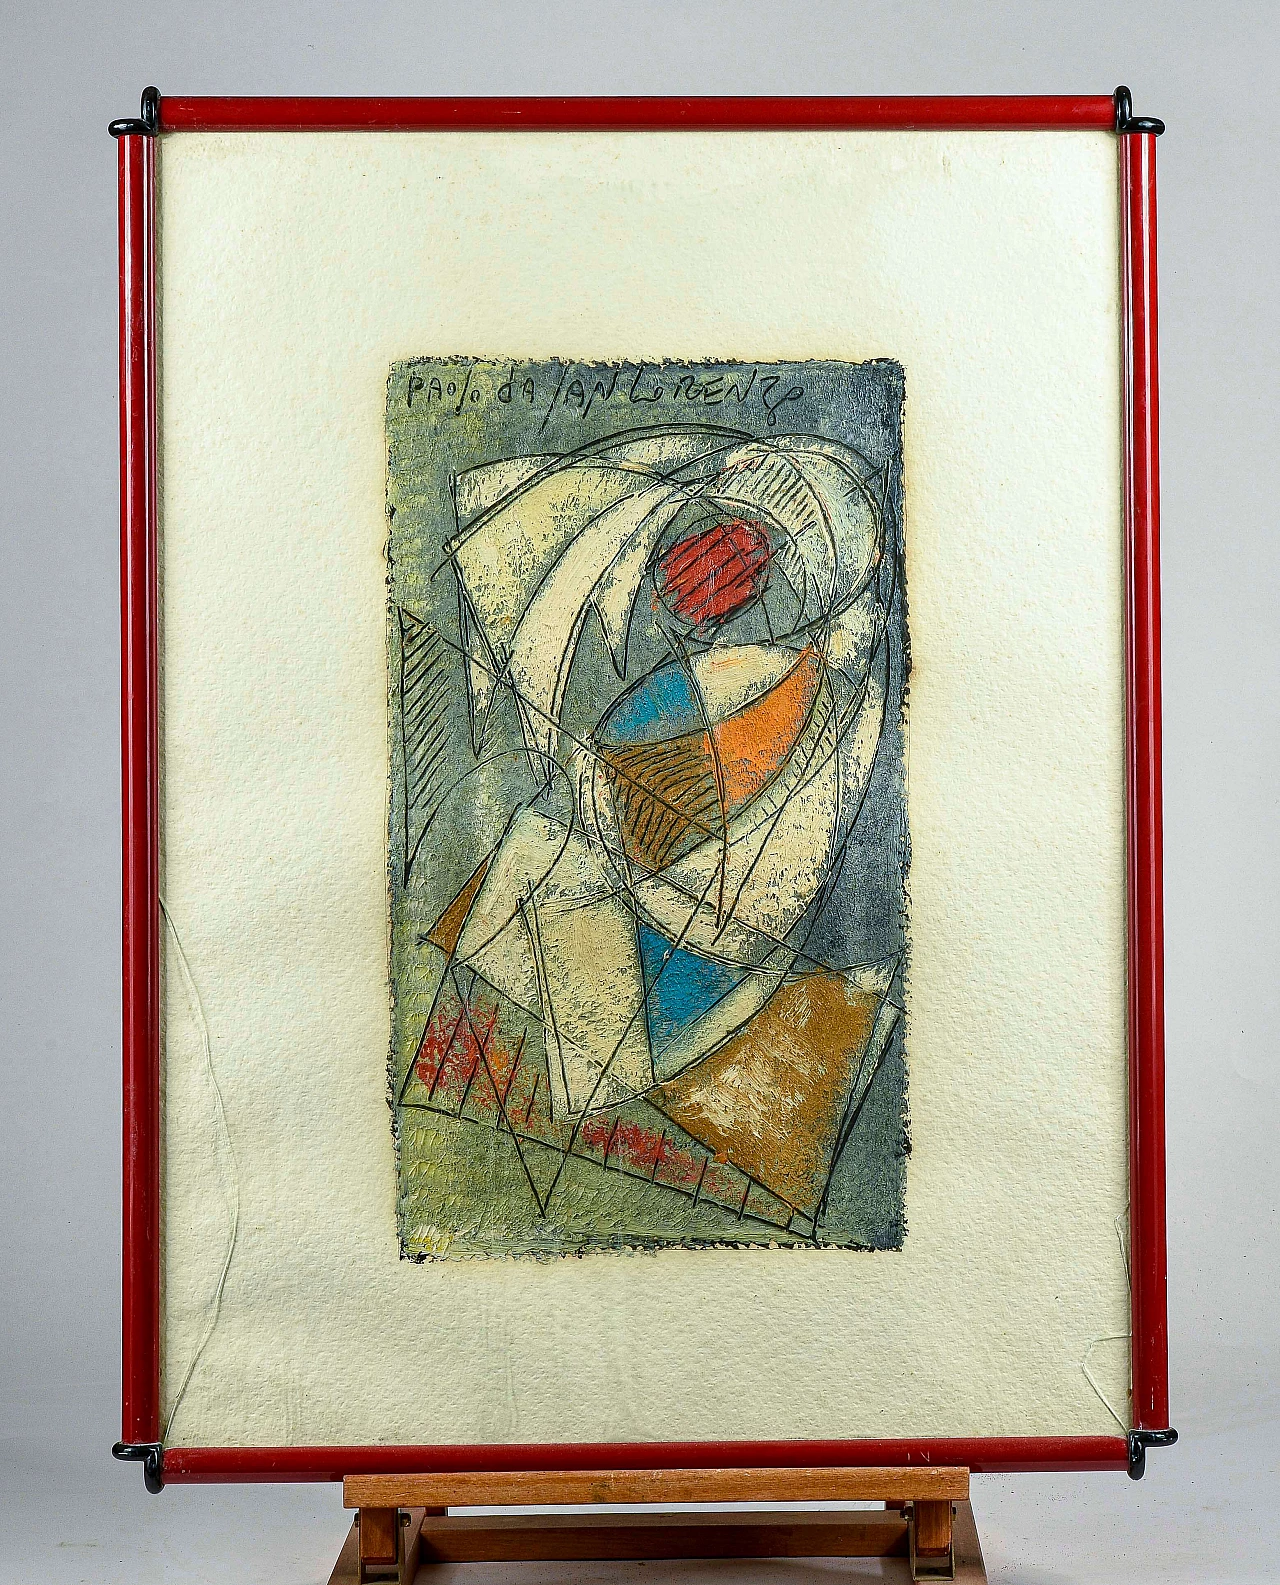 Paolo da San Lorenzo, Informale, olio su carta, 1989 2